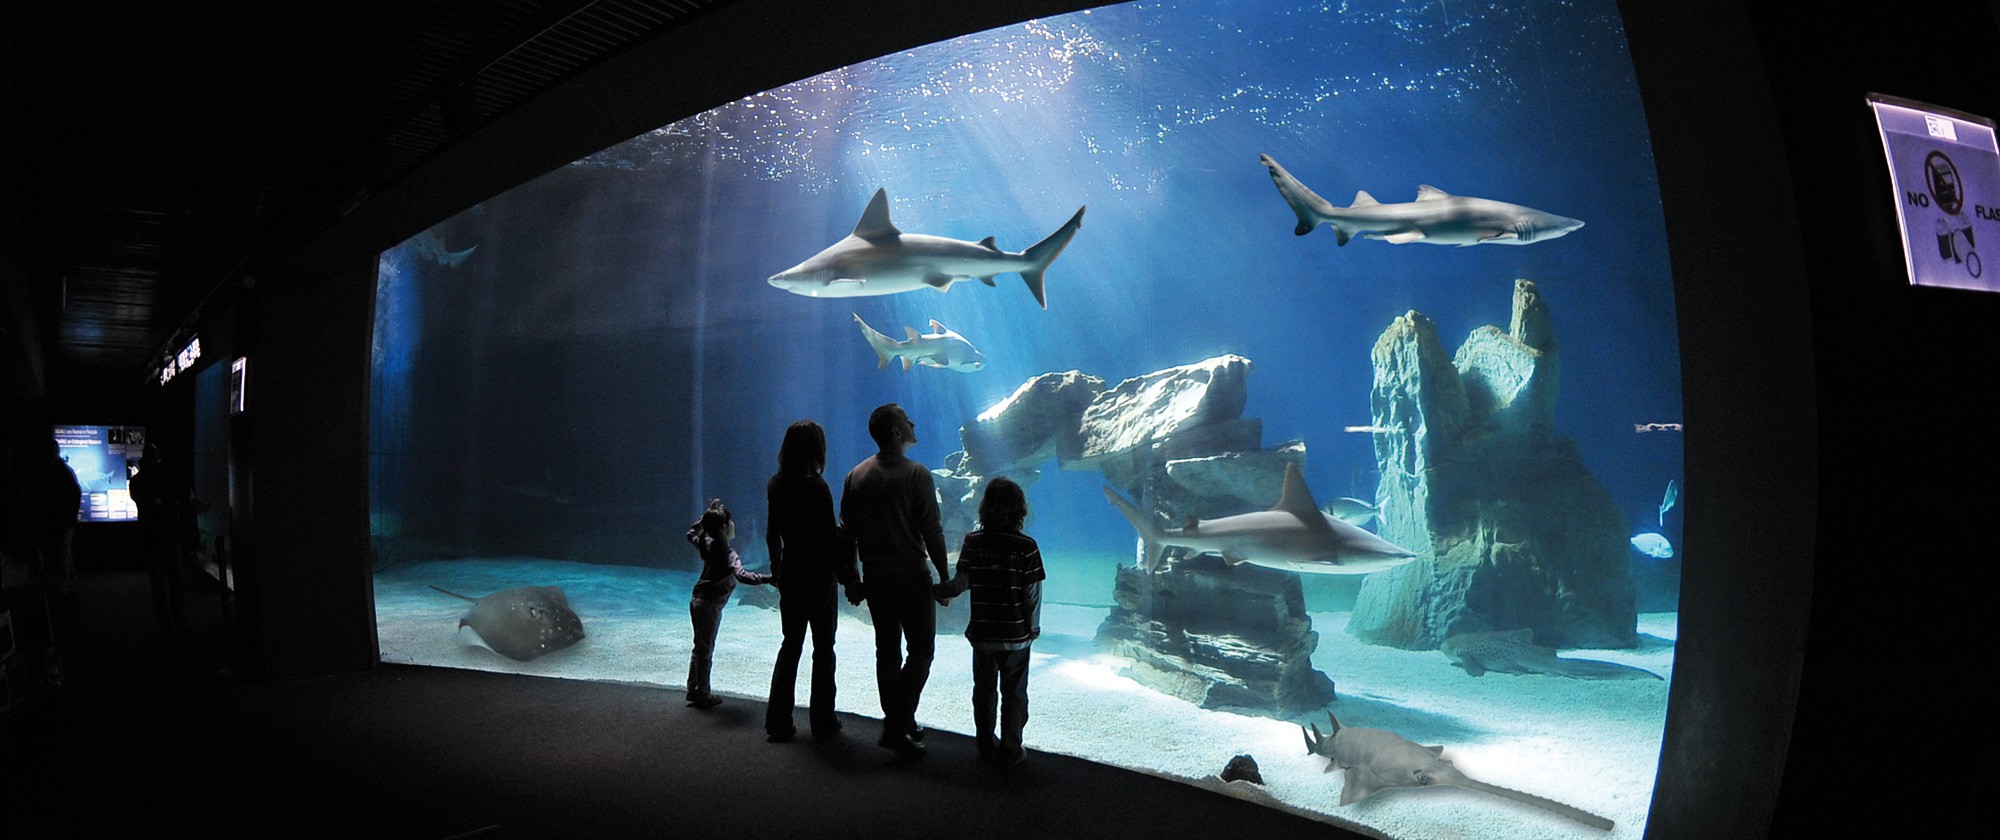 Genova's aquarium